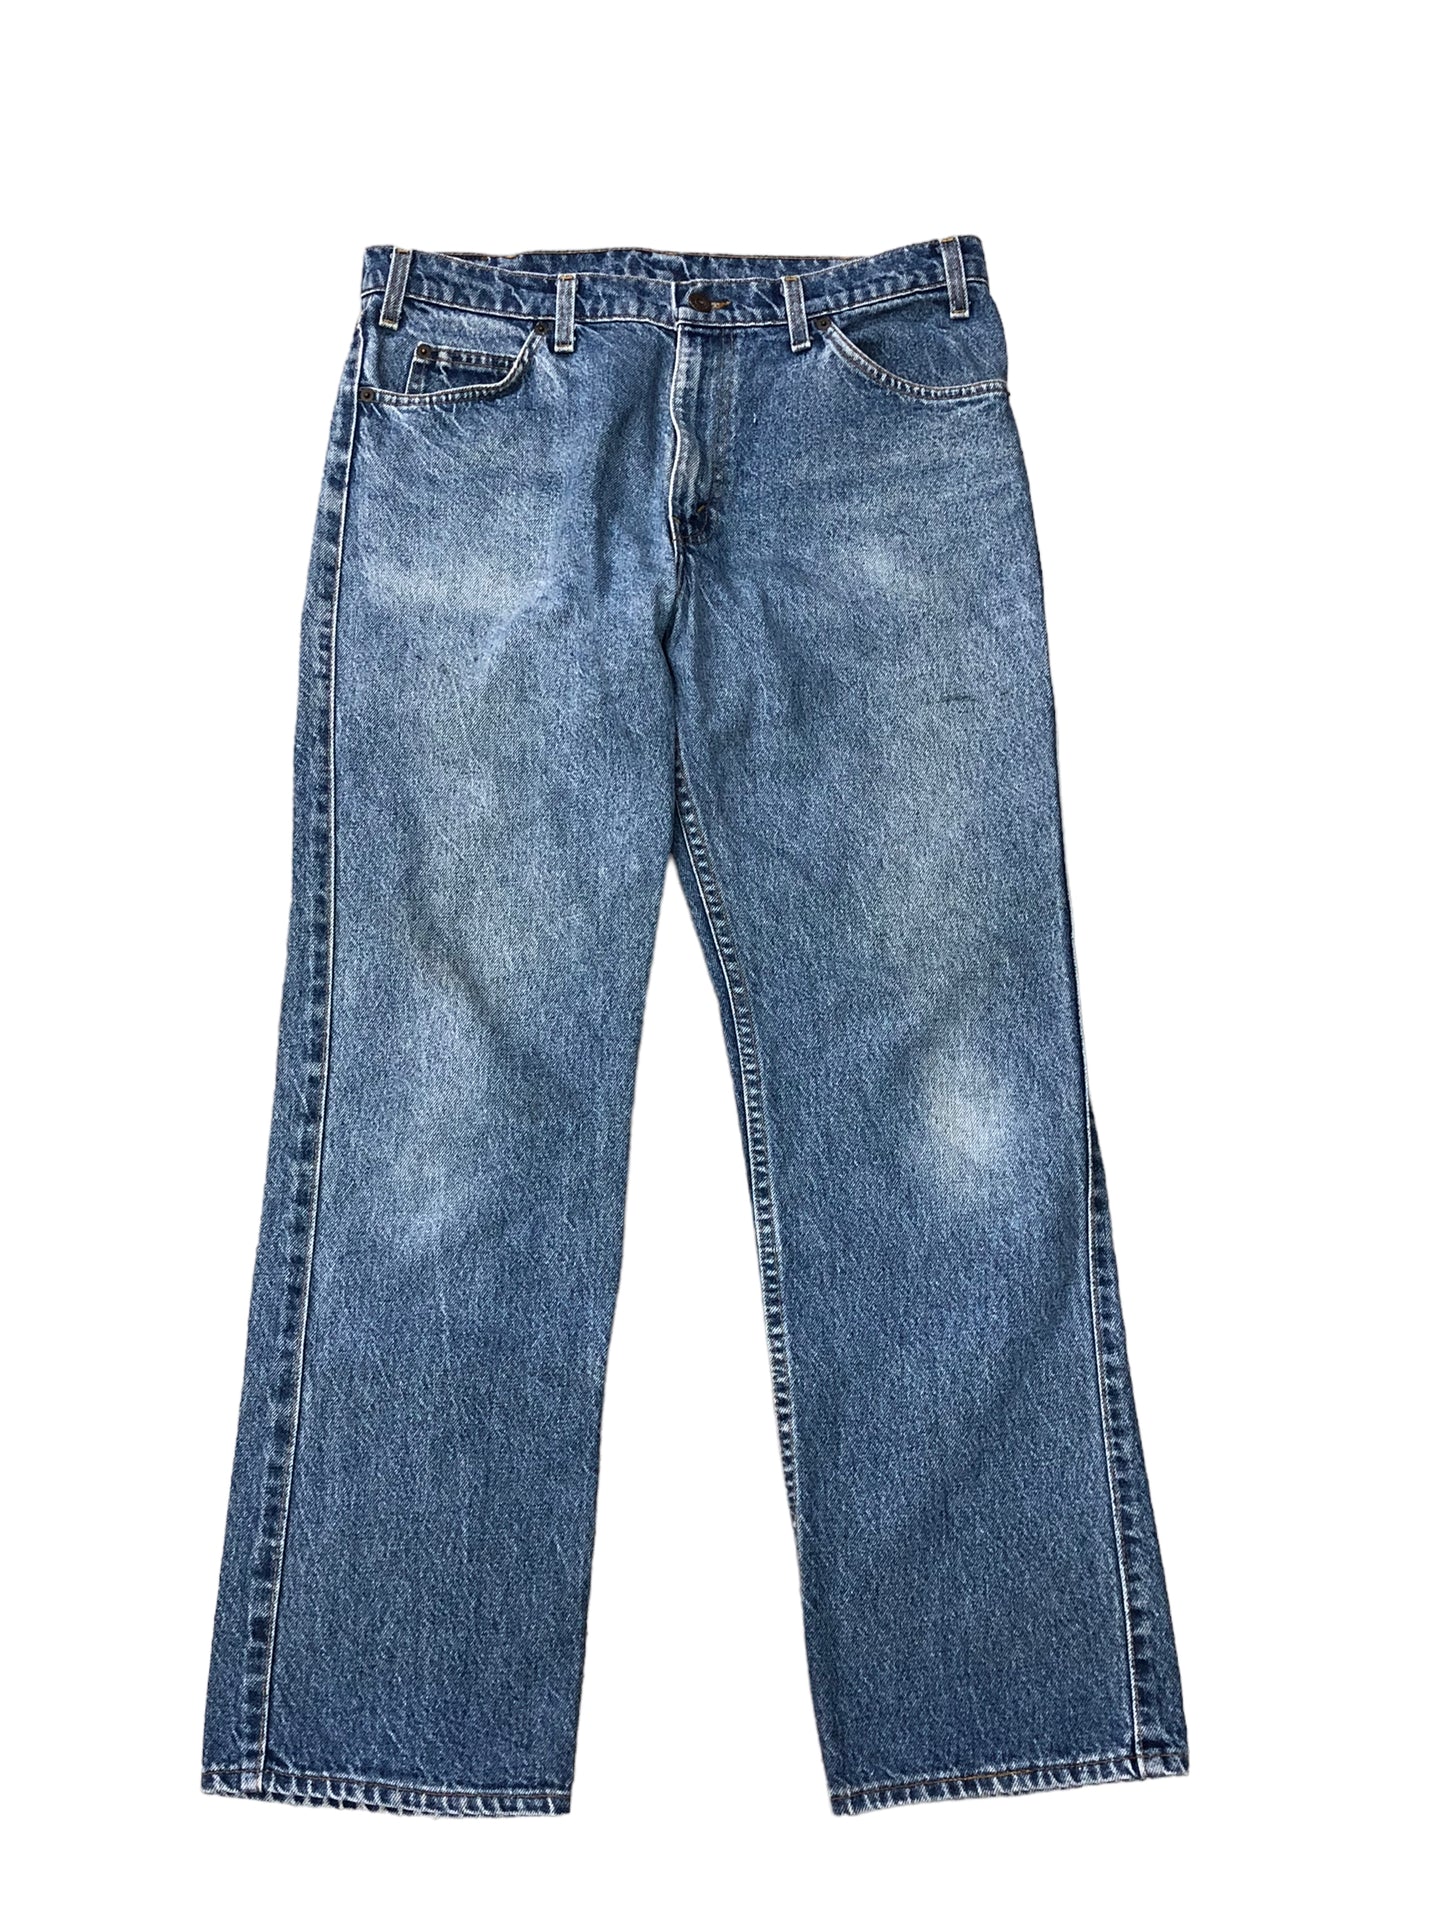 VTG Levi Strauss Leather Tab Denim Jeans Sz 36x30